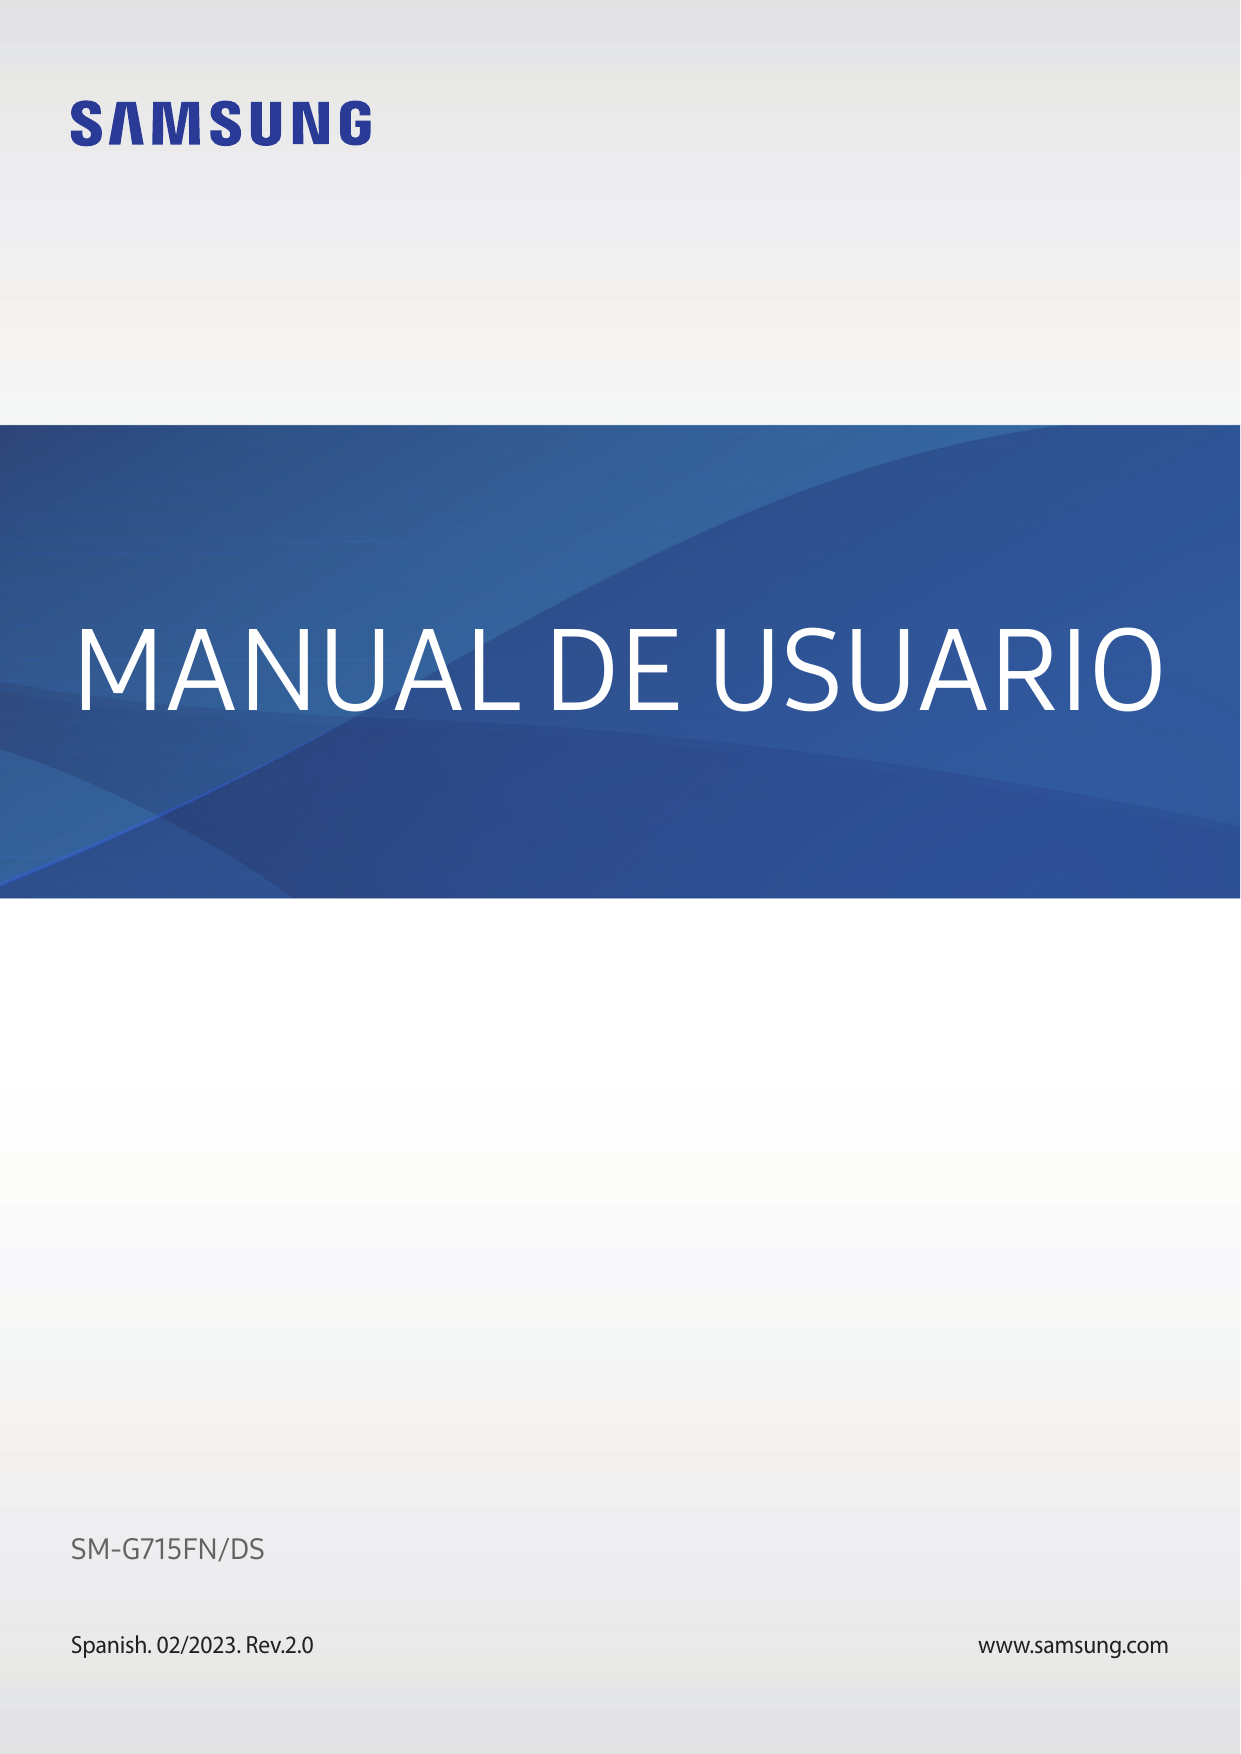 MANUAL DE USUARIOSM-G715FN/DSSpanish. 02/2023. Rev.2.0www.samsung.com